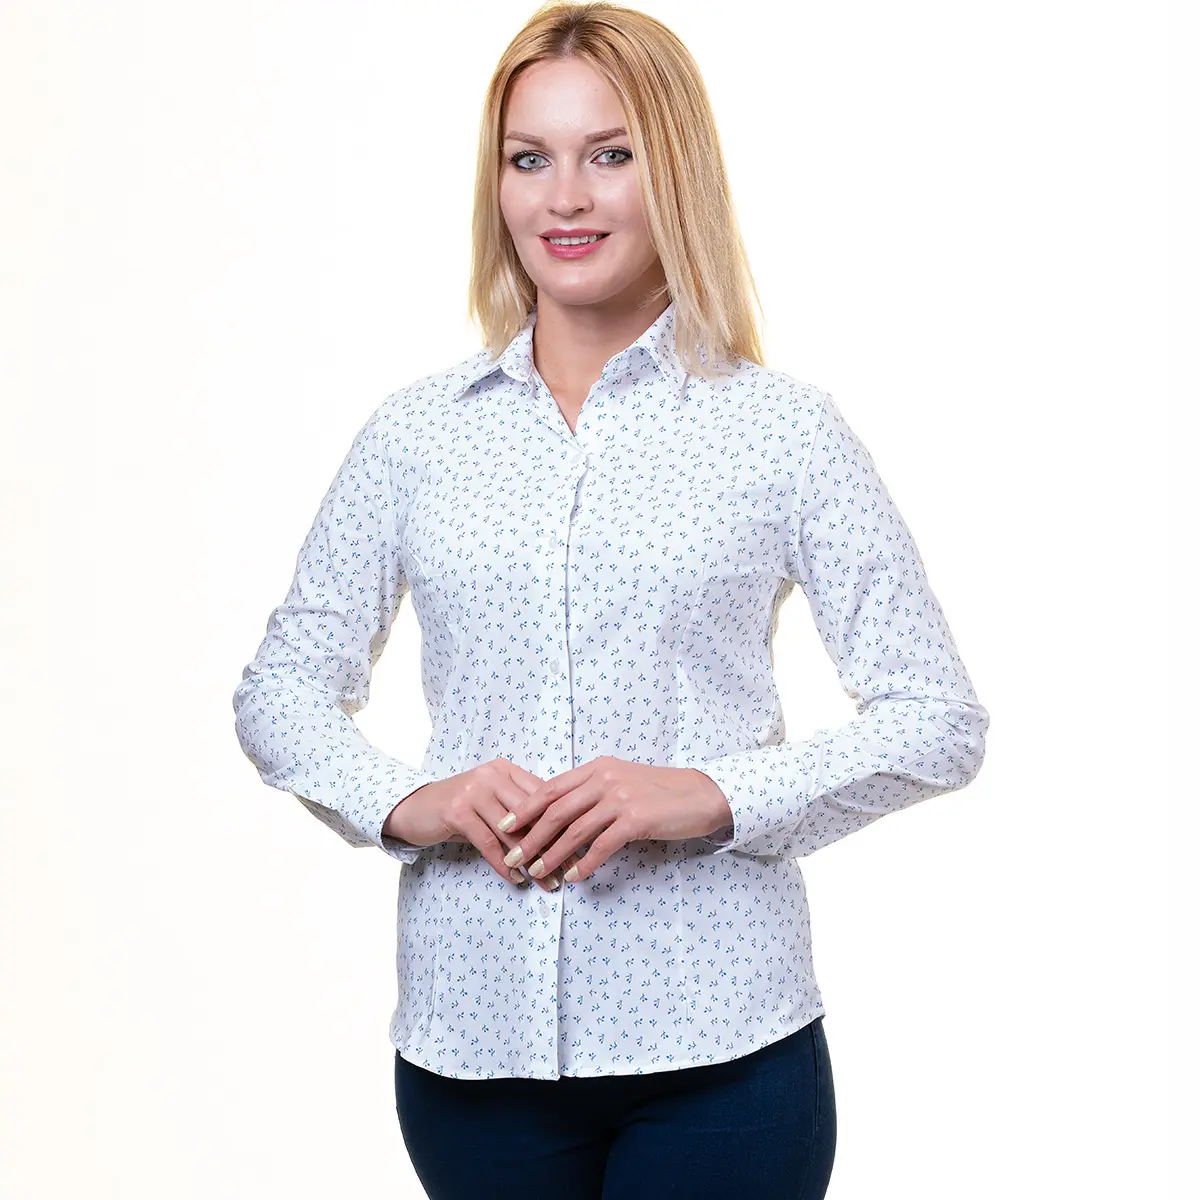 Spring Autumn Long Sleeve Shirts Tops Fashion printing ladies shirts Women's Blouses Shirt fashion made in turkey